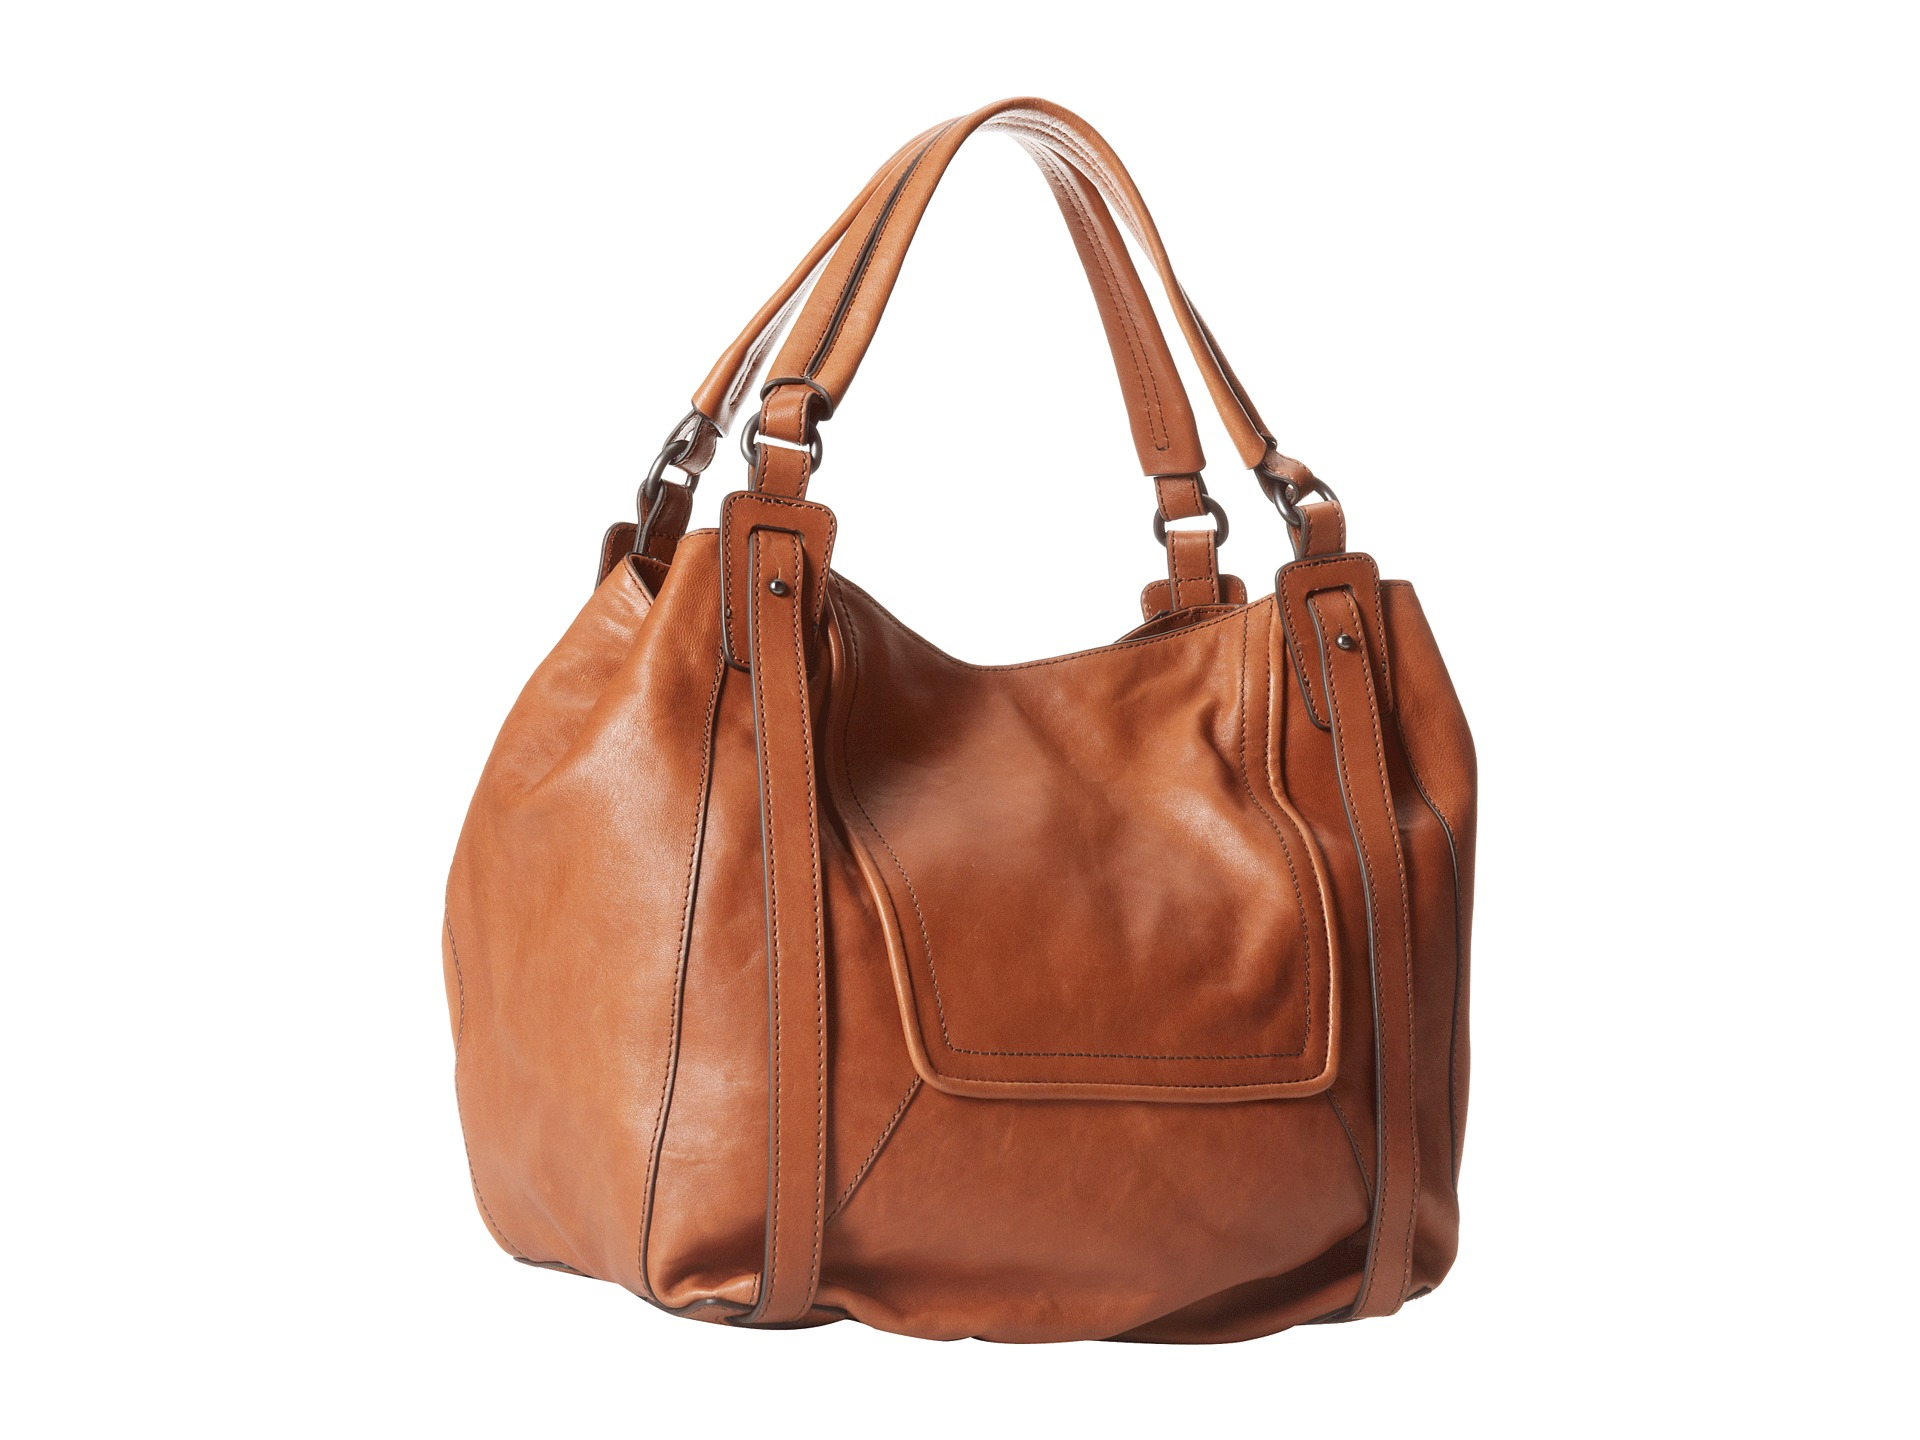 Lyst - Kooba Jonnie Handbag in Brown